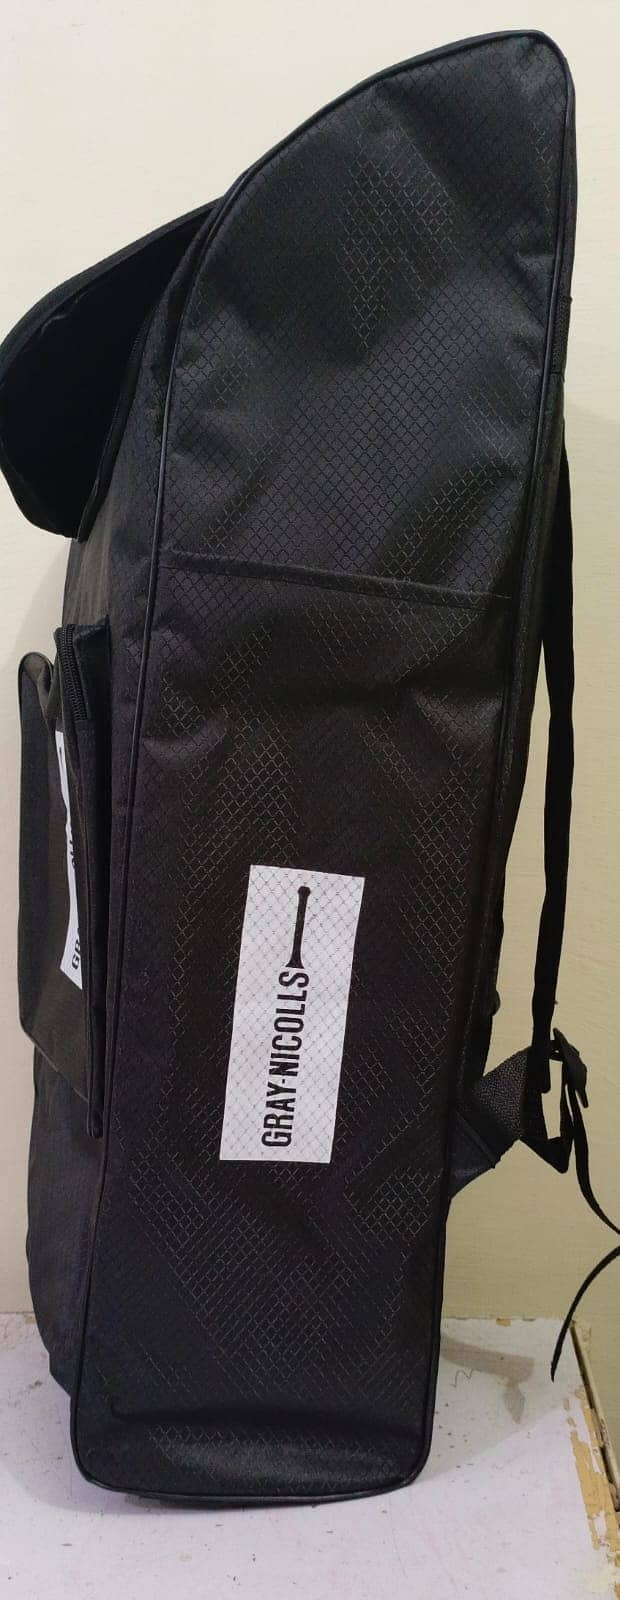 Cricket Hard ball Kit Bag With Bat Pocket 4